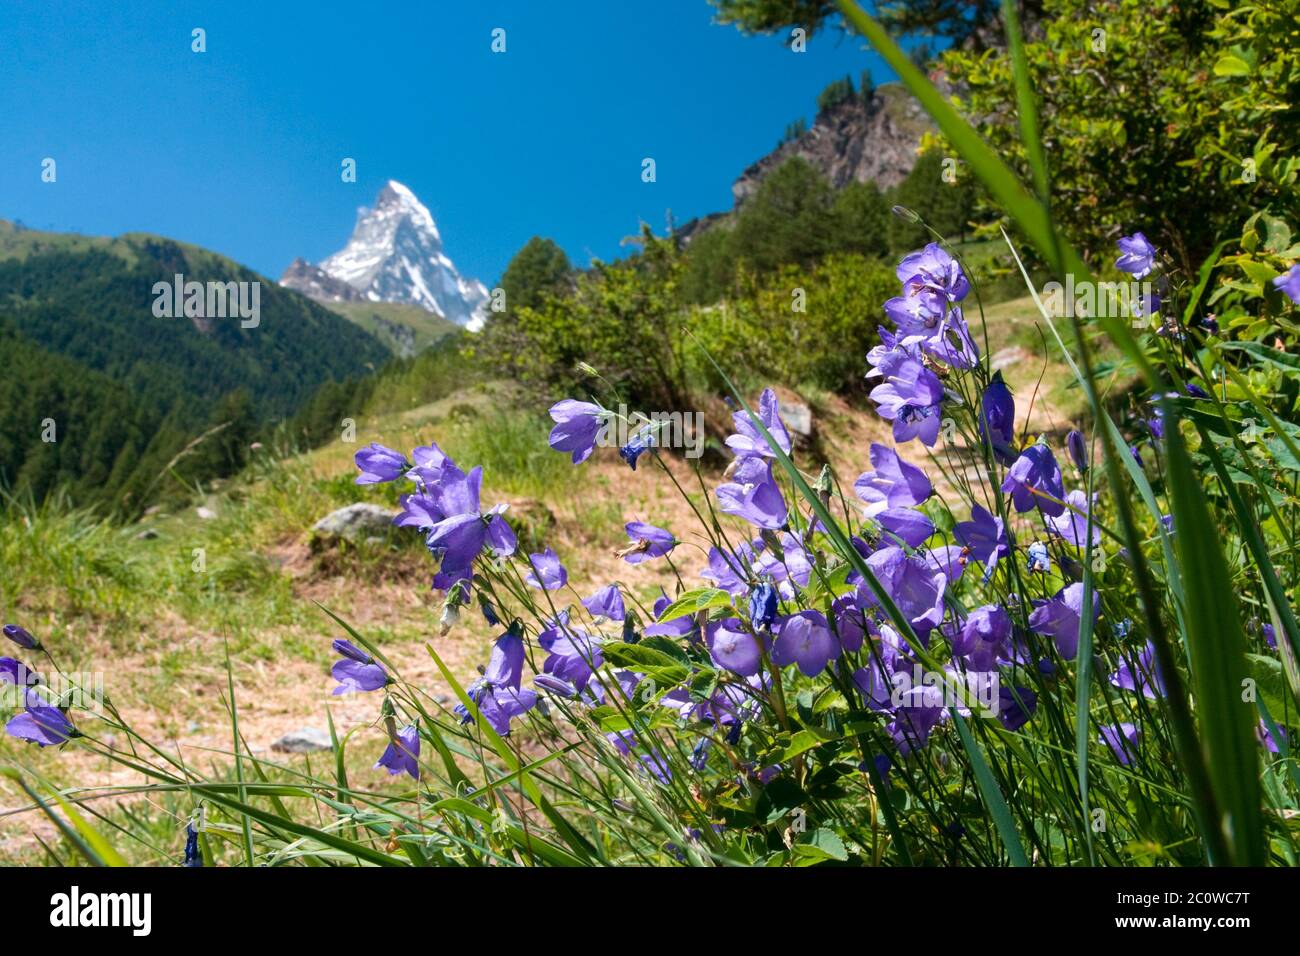 Montagne alpes Suisse cervin suisse paysage paysage campagne Banque D'Images